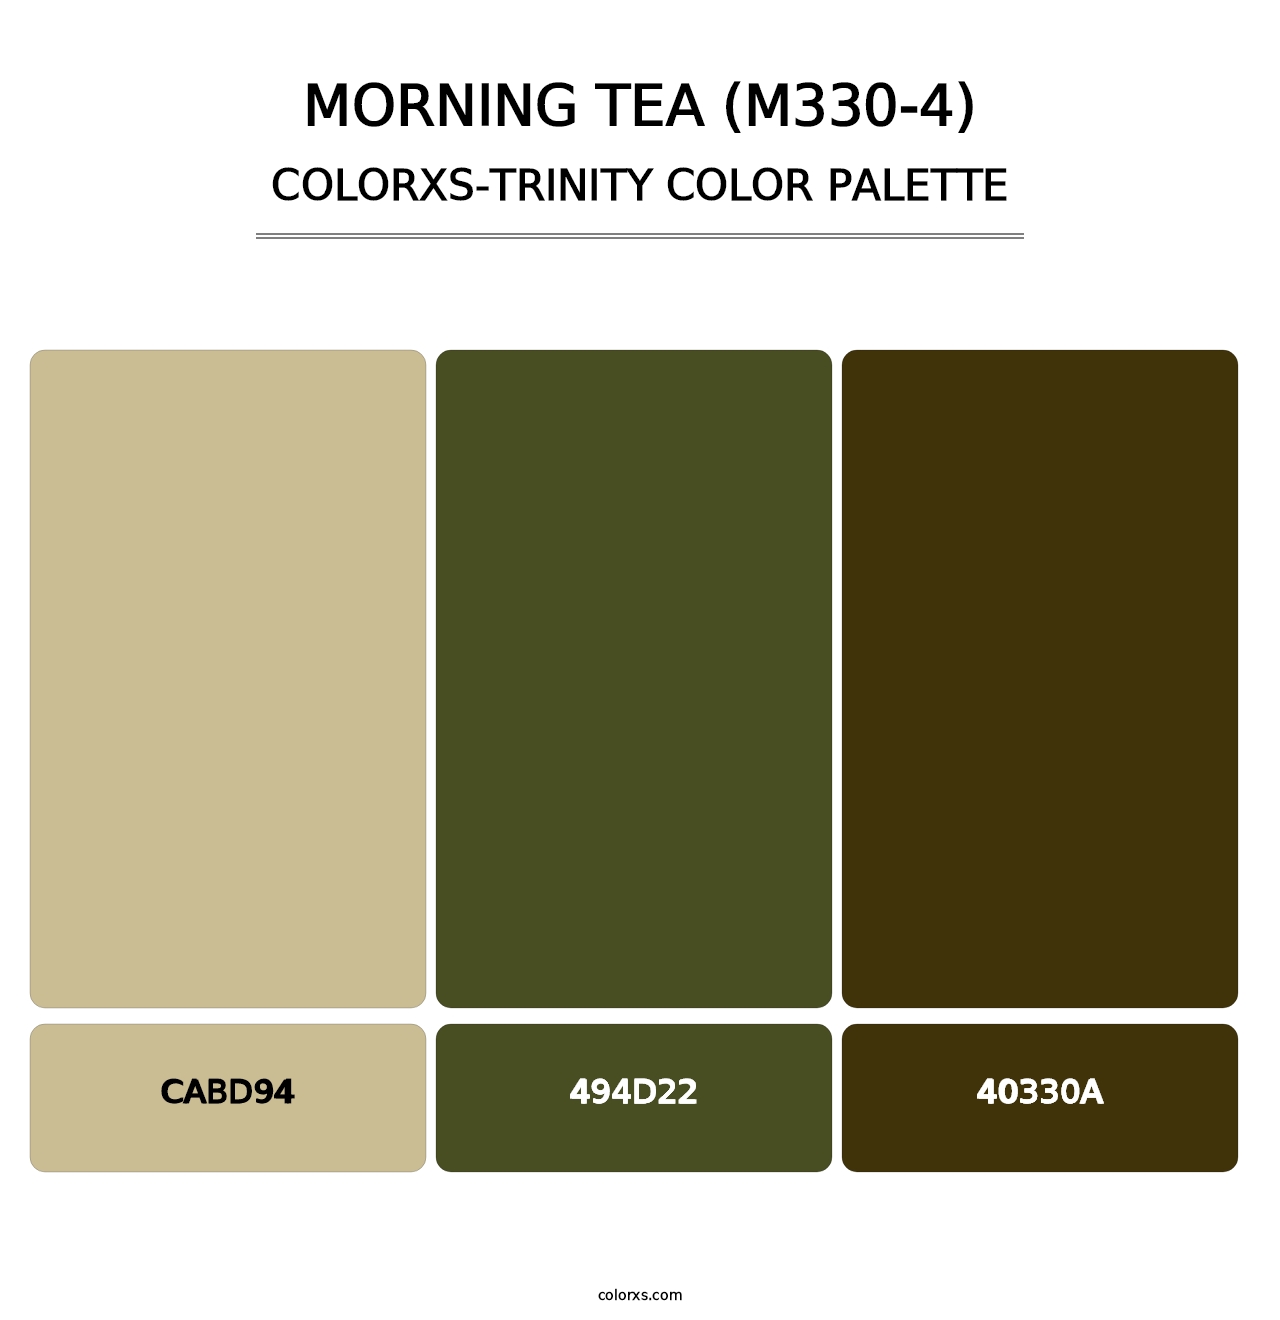 Morning Tea (M330-4) - Colorxs Trinity Palette